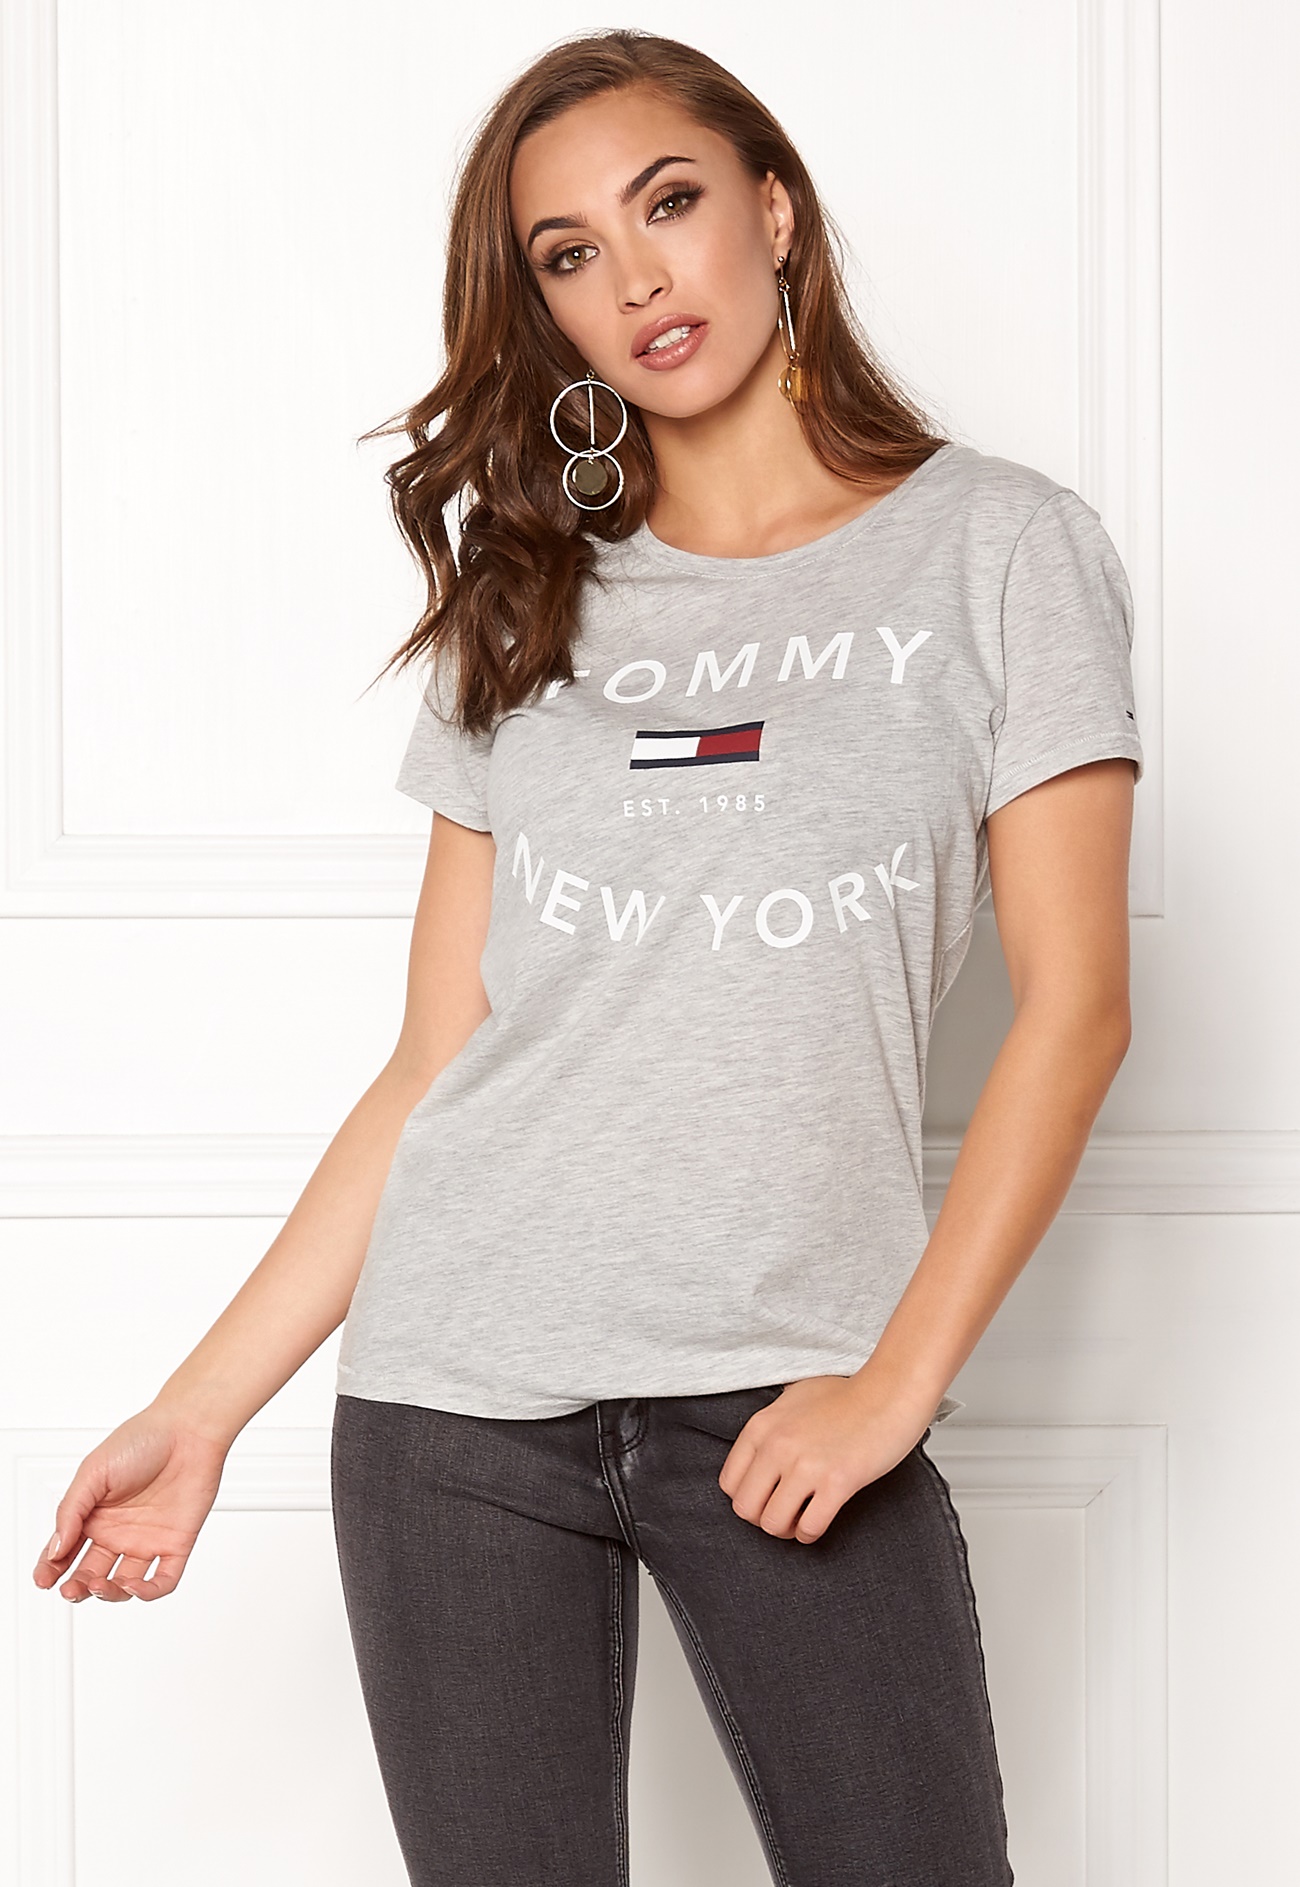 Tommy hilfiger new york city t shirt Girls size charts, size chart